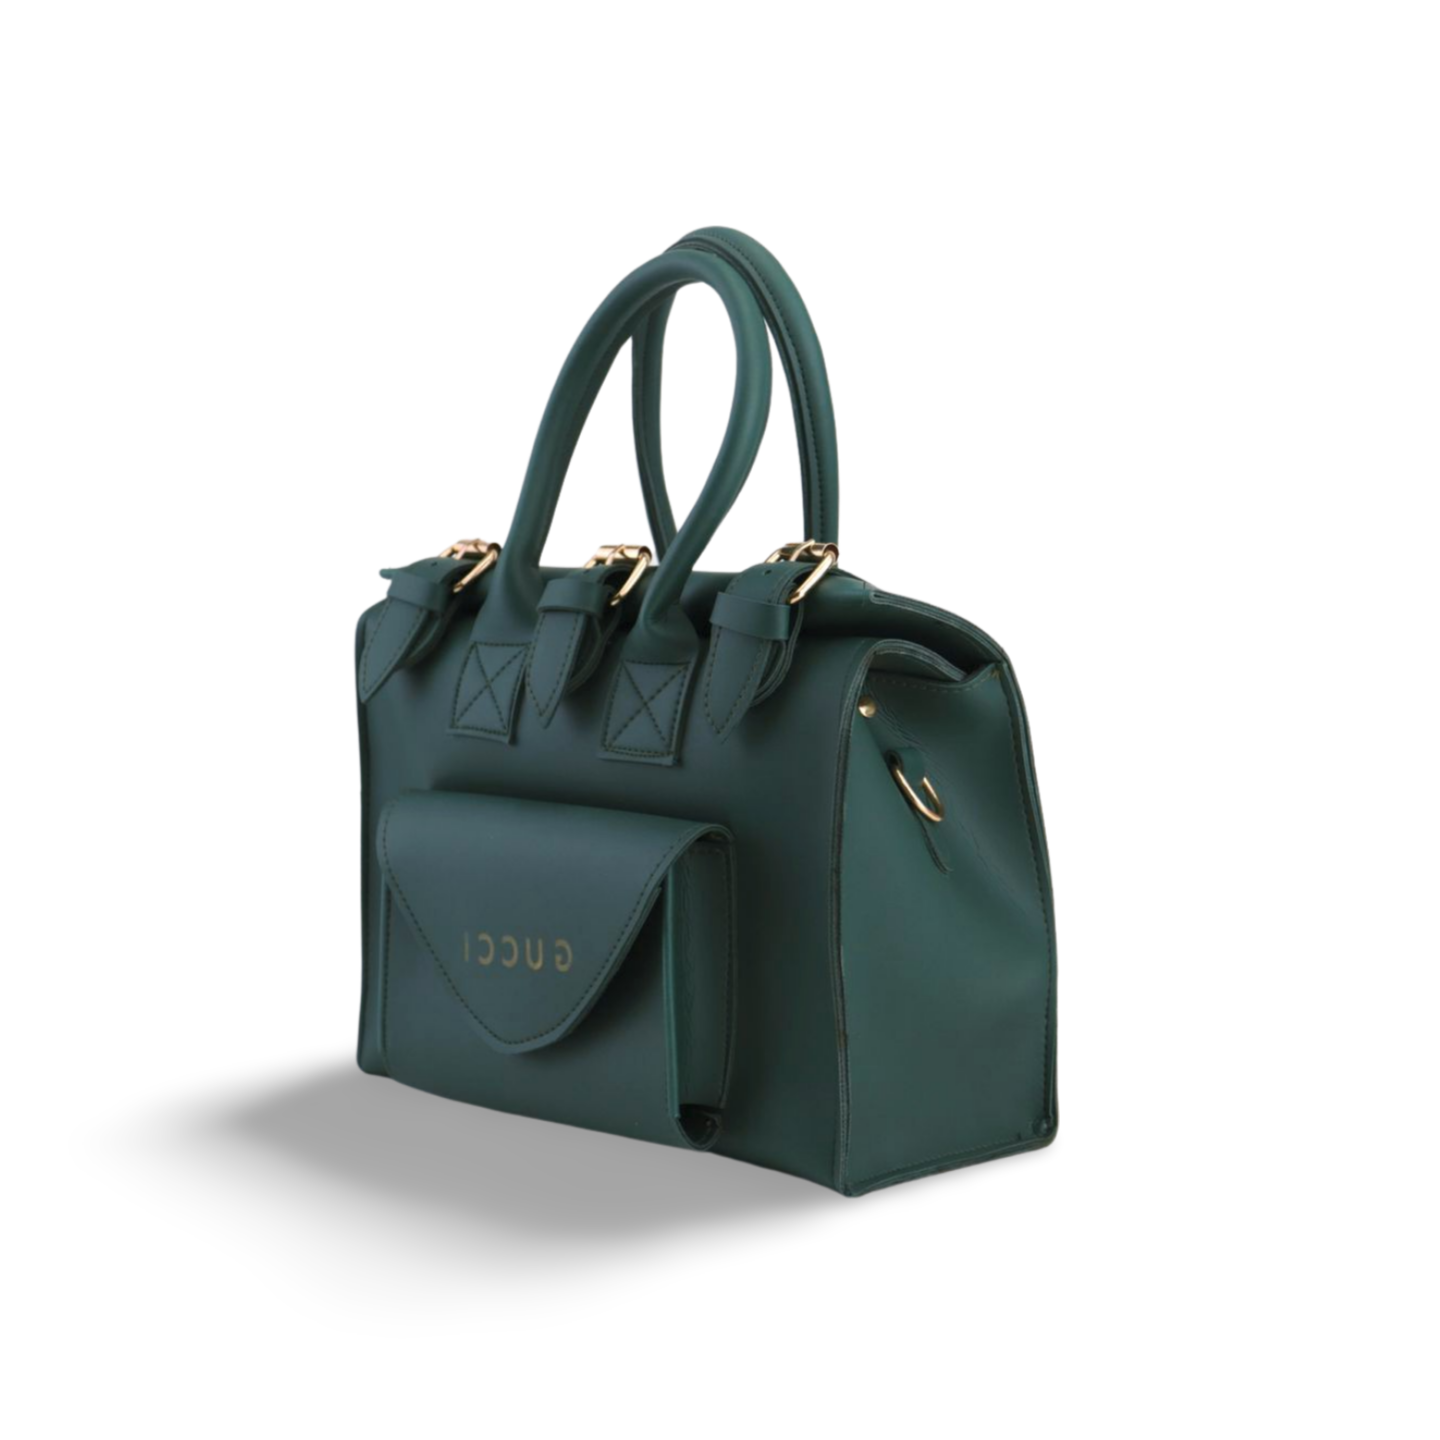 Classy PU Leather Handbag - High Quality, Stylish, and Affordable